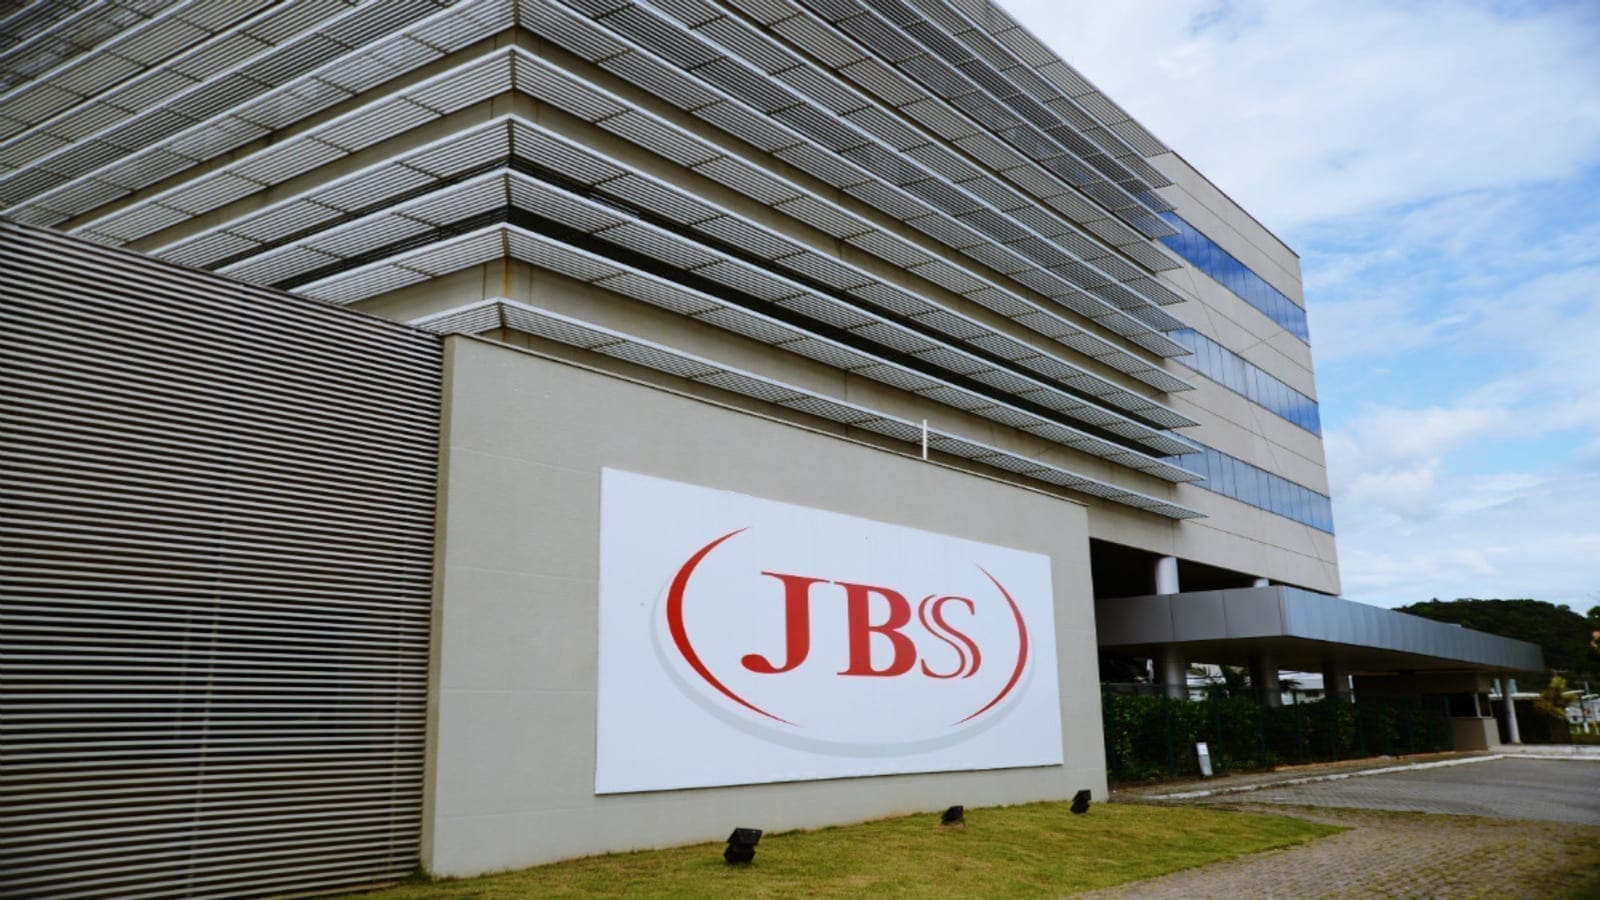 JBS explores major investments in Saudi Arabia strengthening ties in Middle East